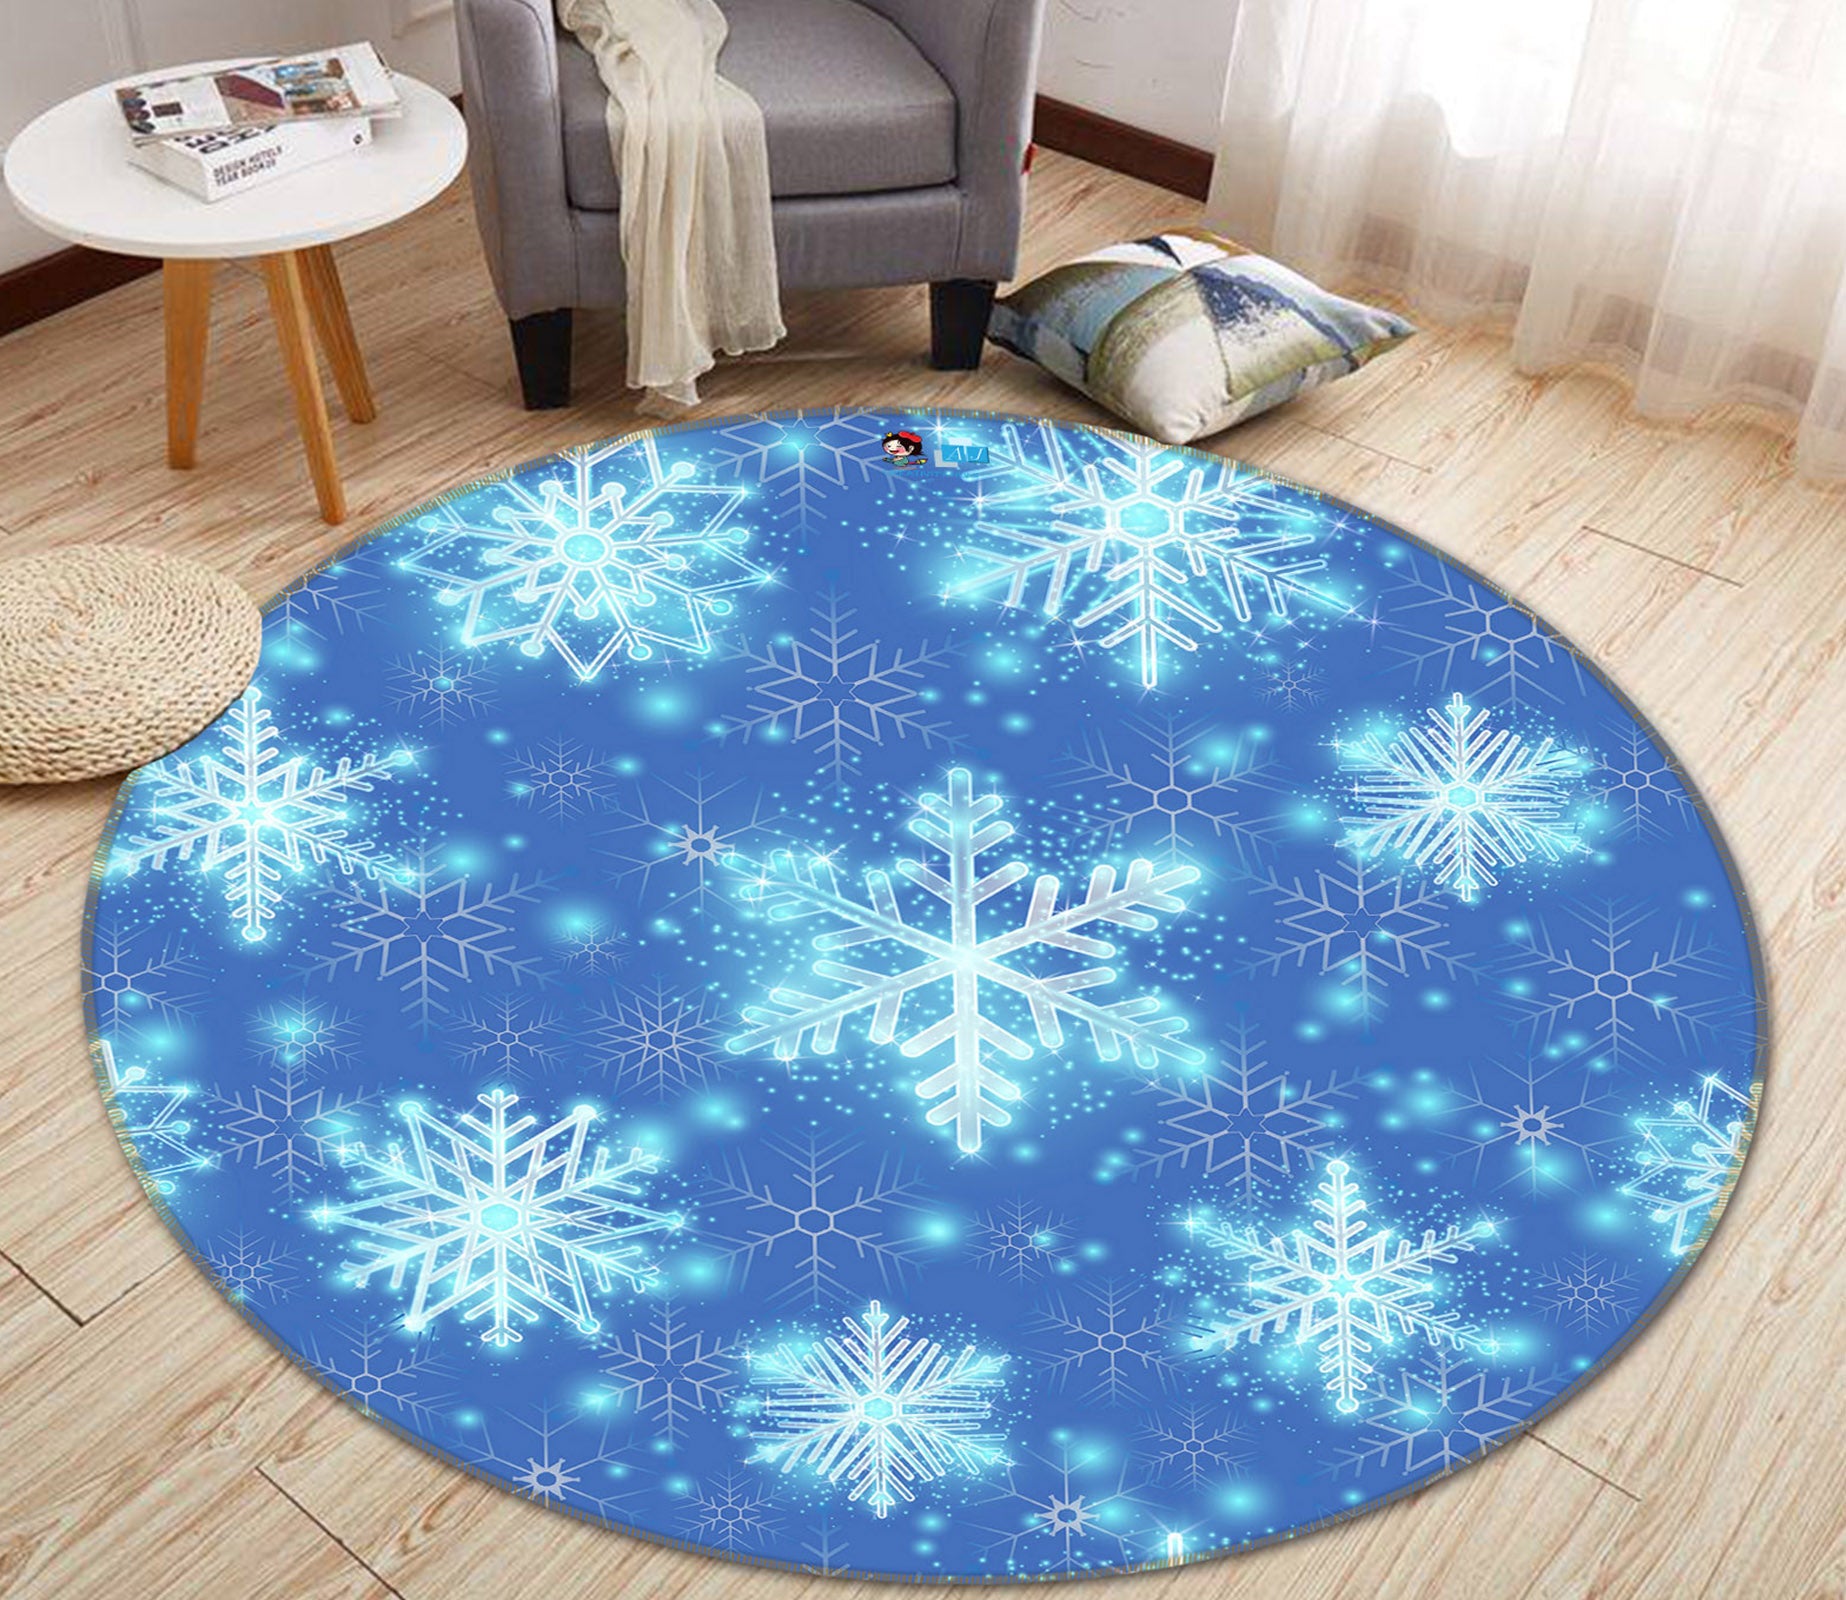 3D Blue Snowflakes 55269 Christmas Round Non Slip Rug Mat Xmas